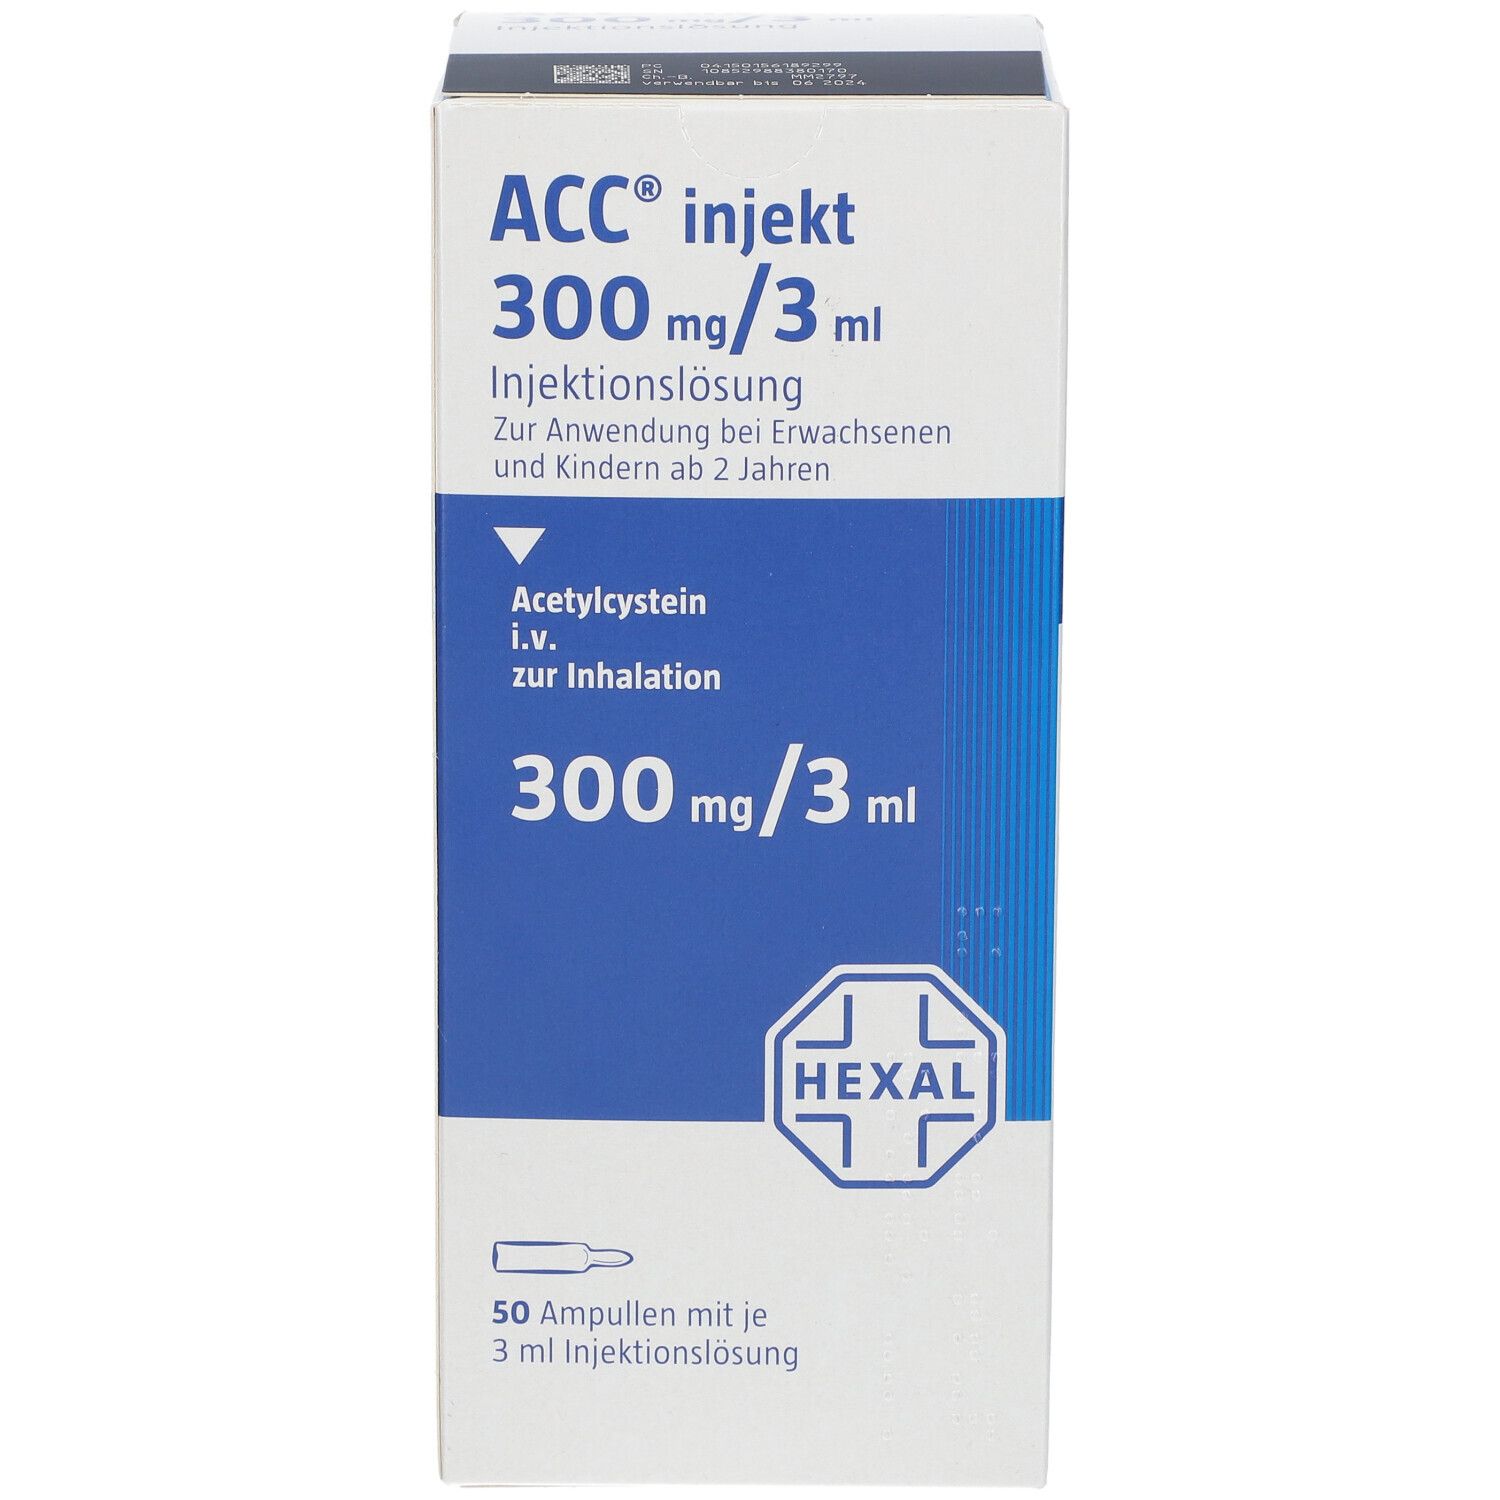 ACC® injekt 300 mg/3 ml